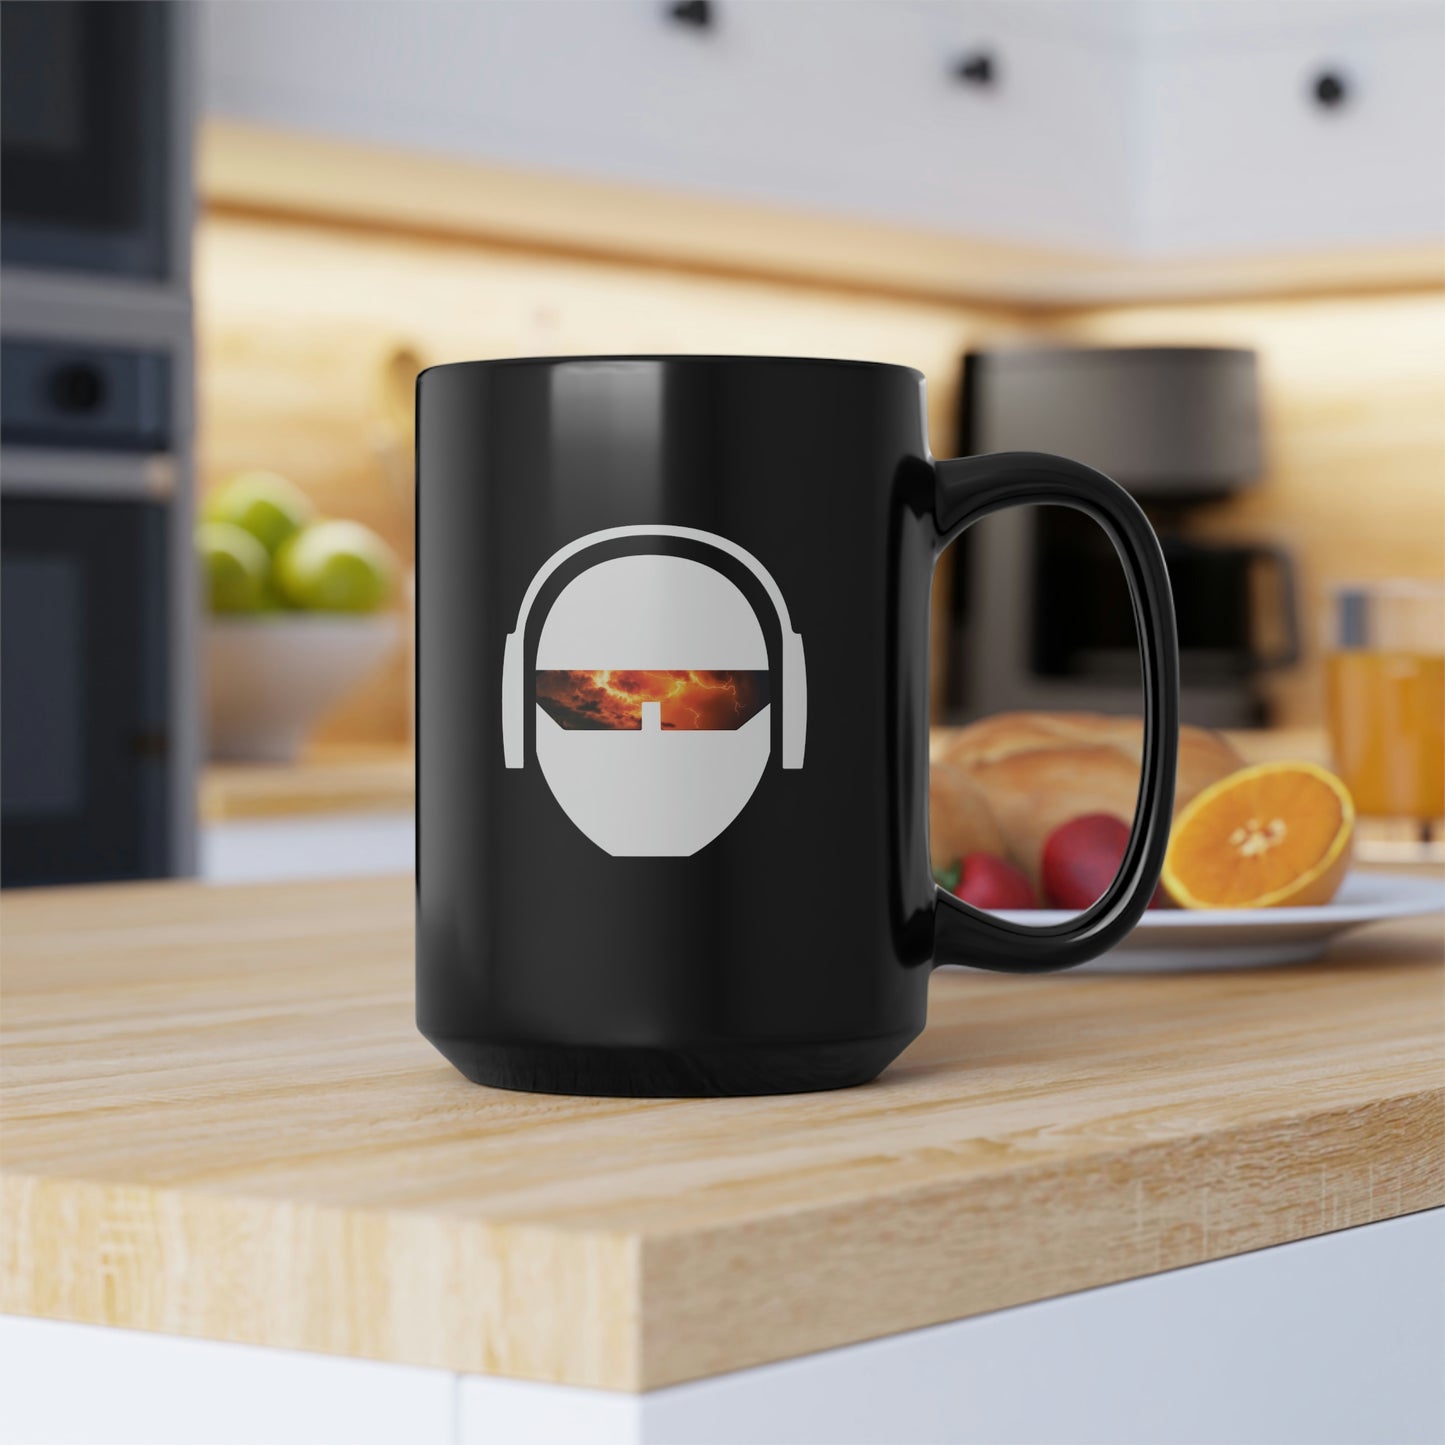 Bitcoin Breakout Logo 15 oz Black Ceramic Coffee Mug